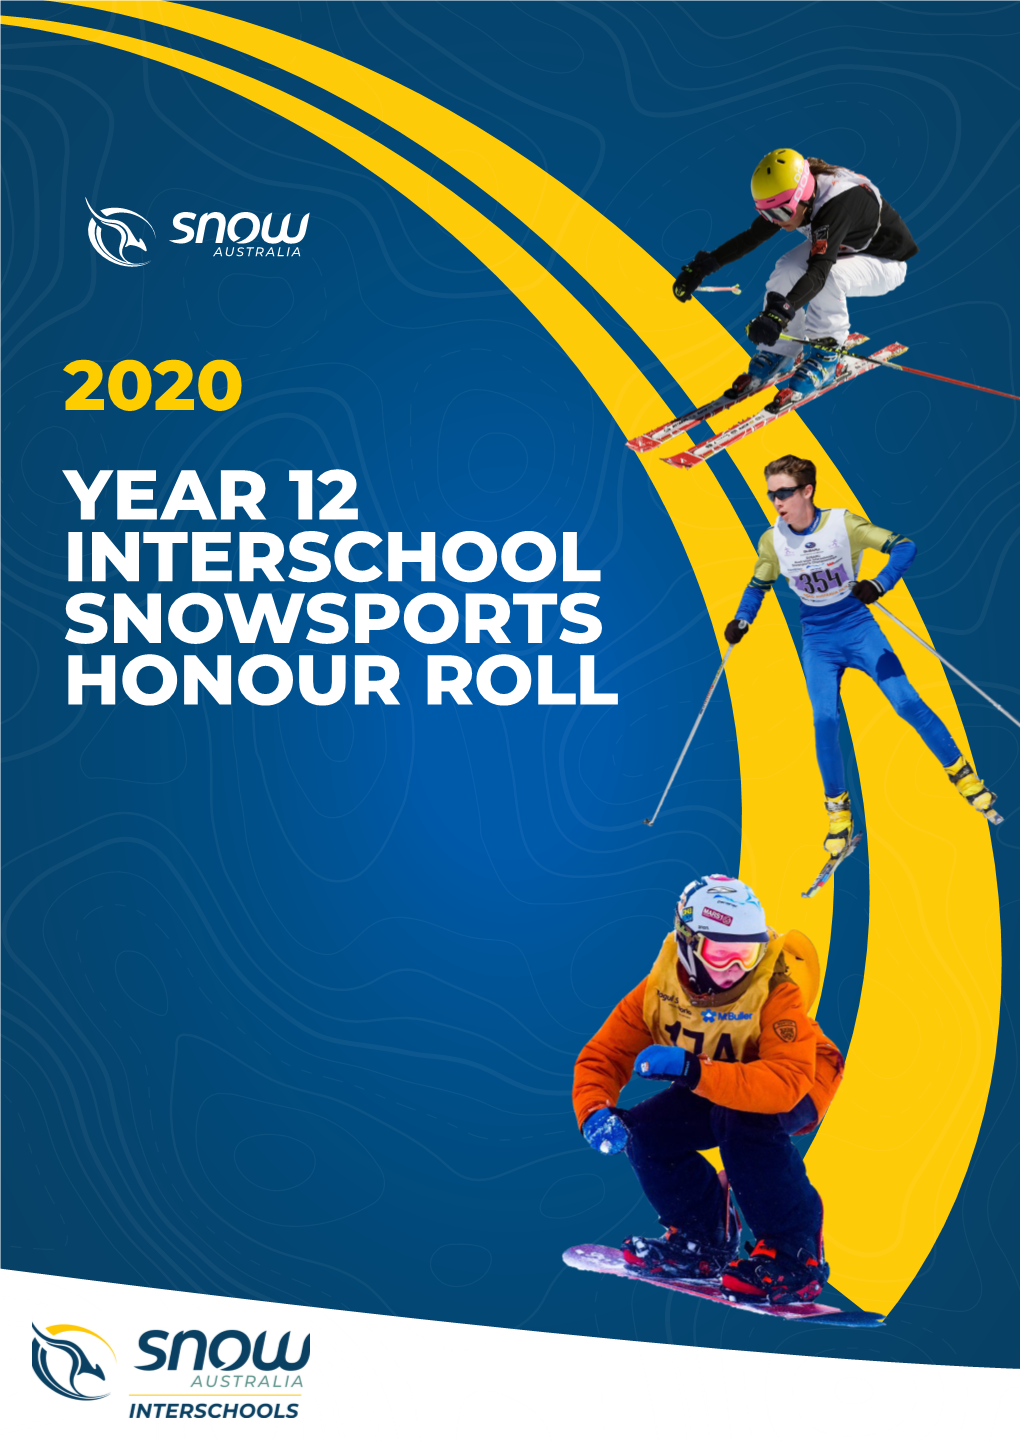 2020 Year 12 Interschool Snowsports Honour Roll 2020 - Year 12 Honour Roll